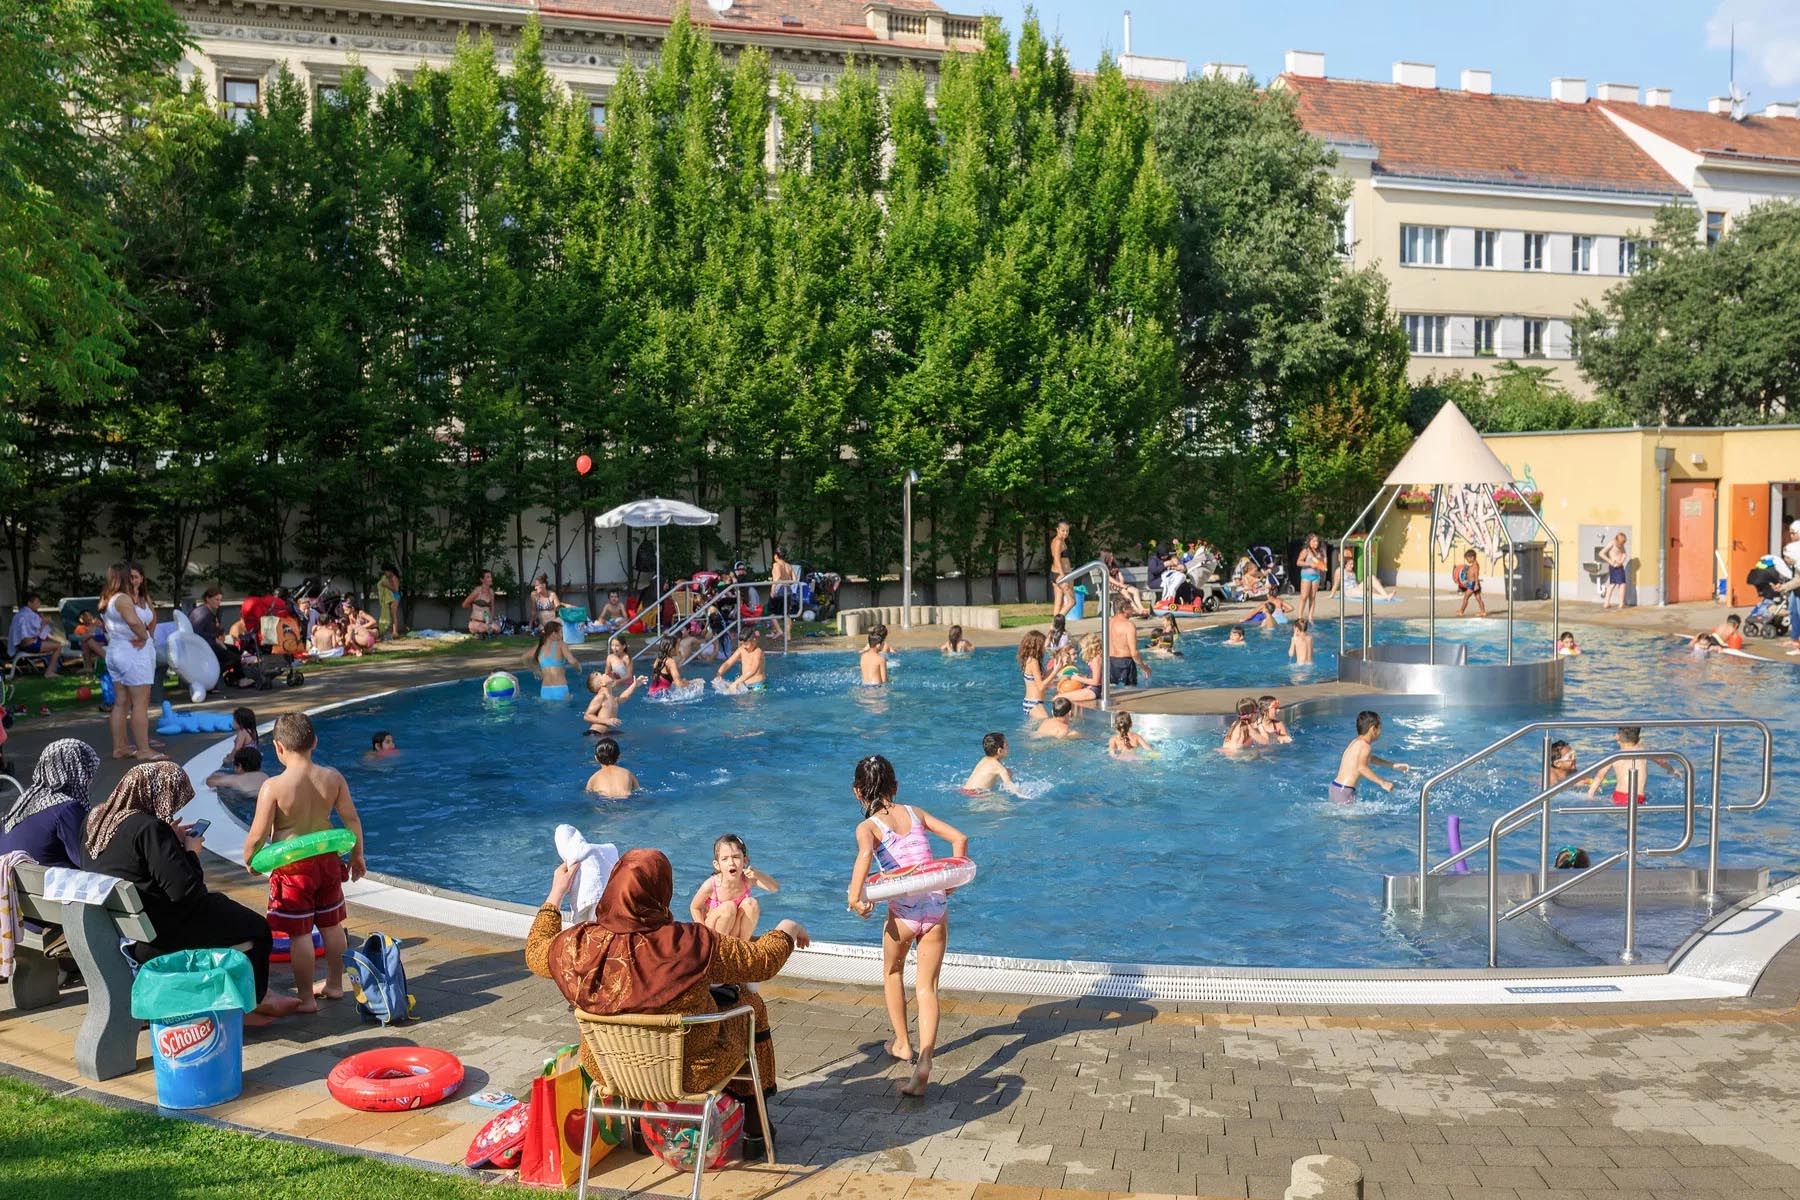 Outdoor family pool in the Hofferplatz city park, Ottakring